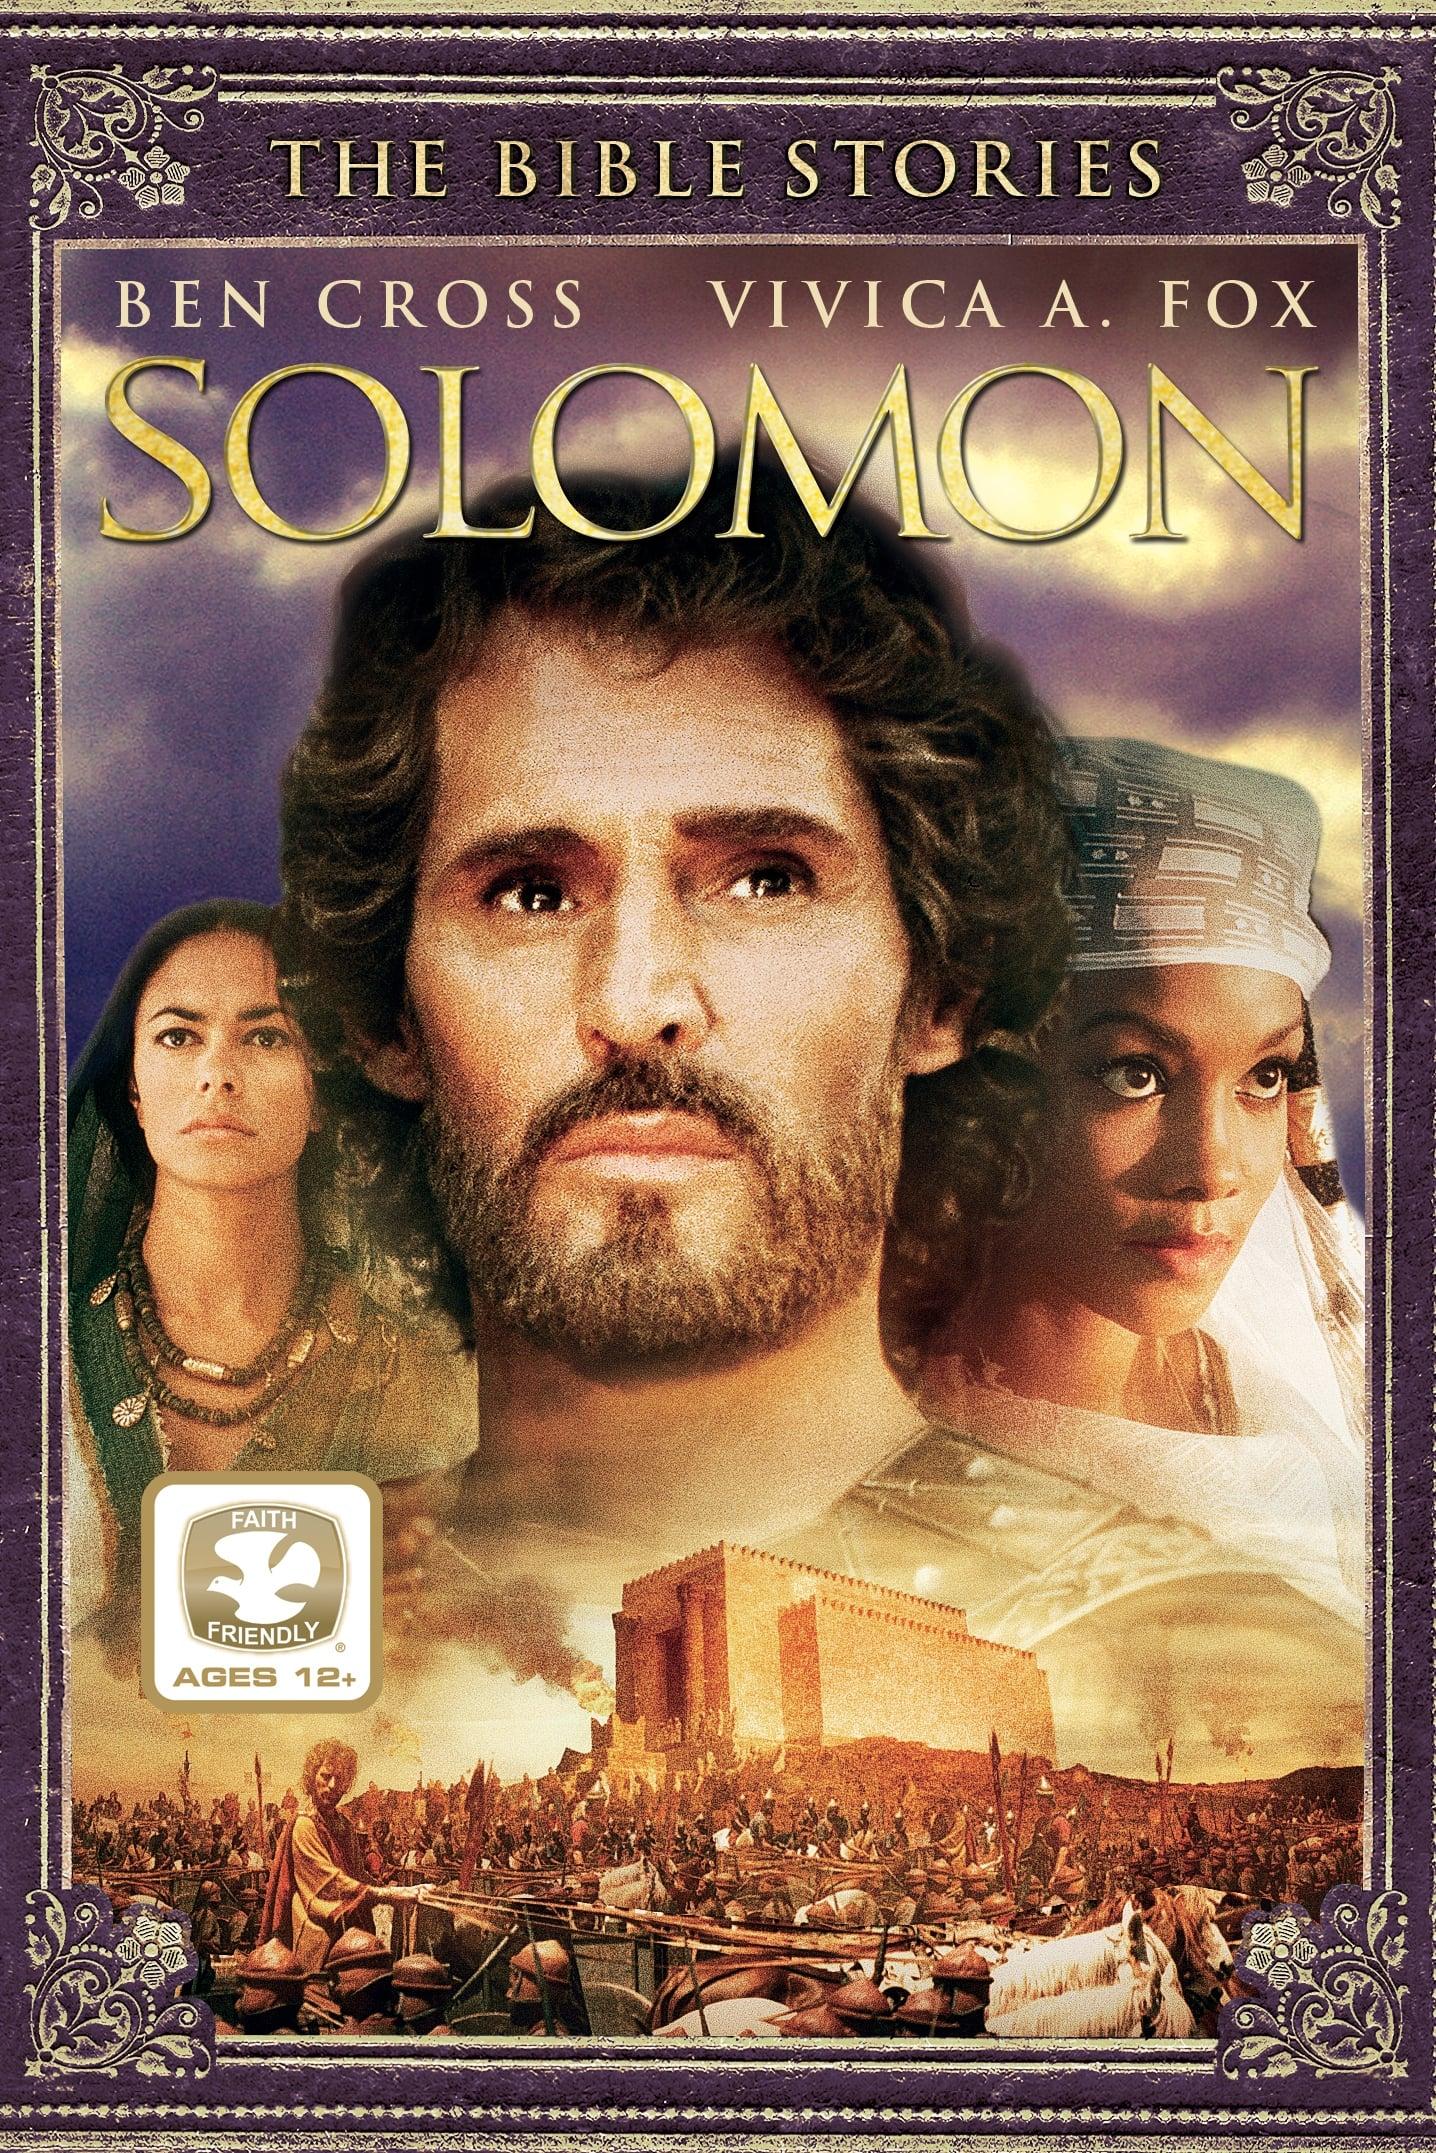 Solomon poster